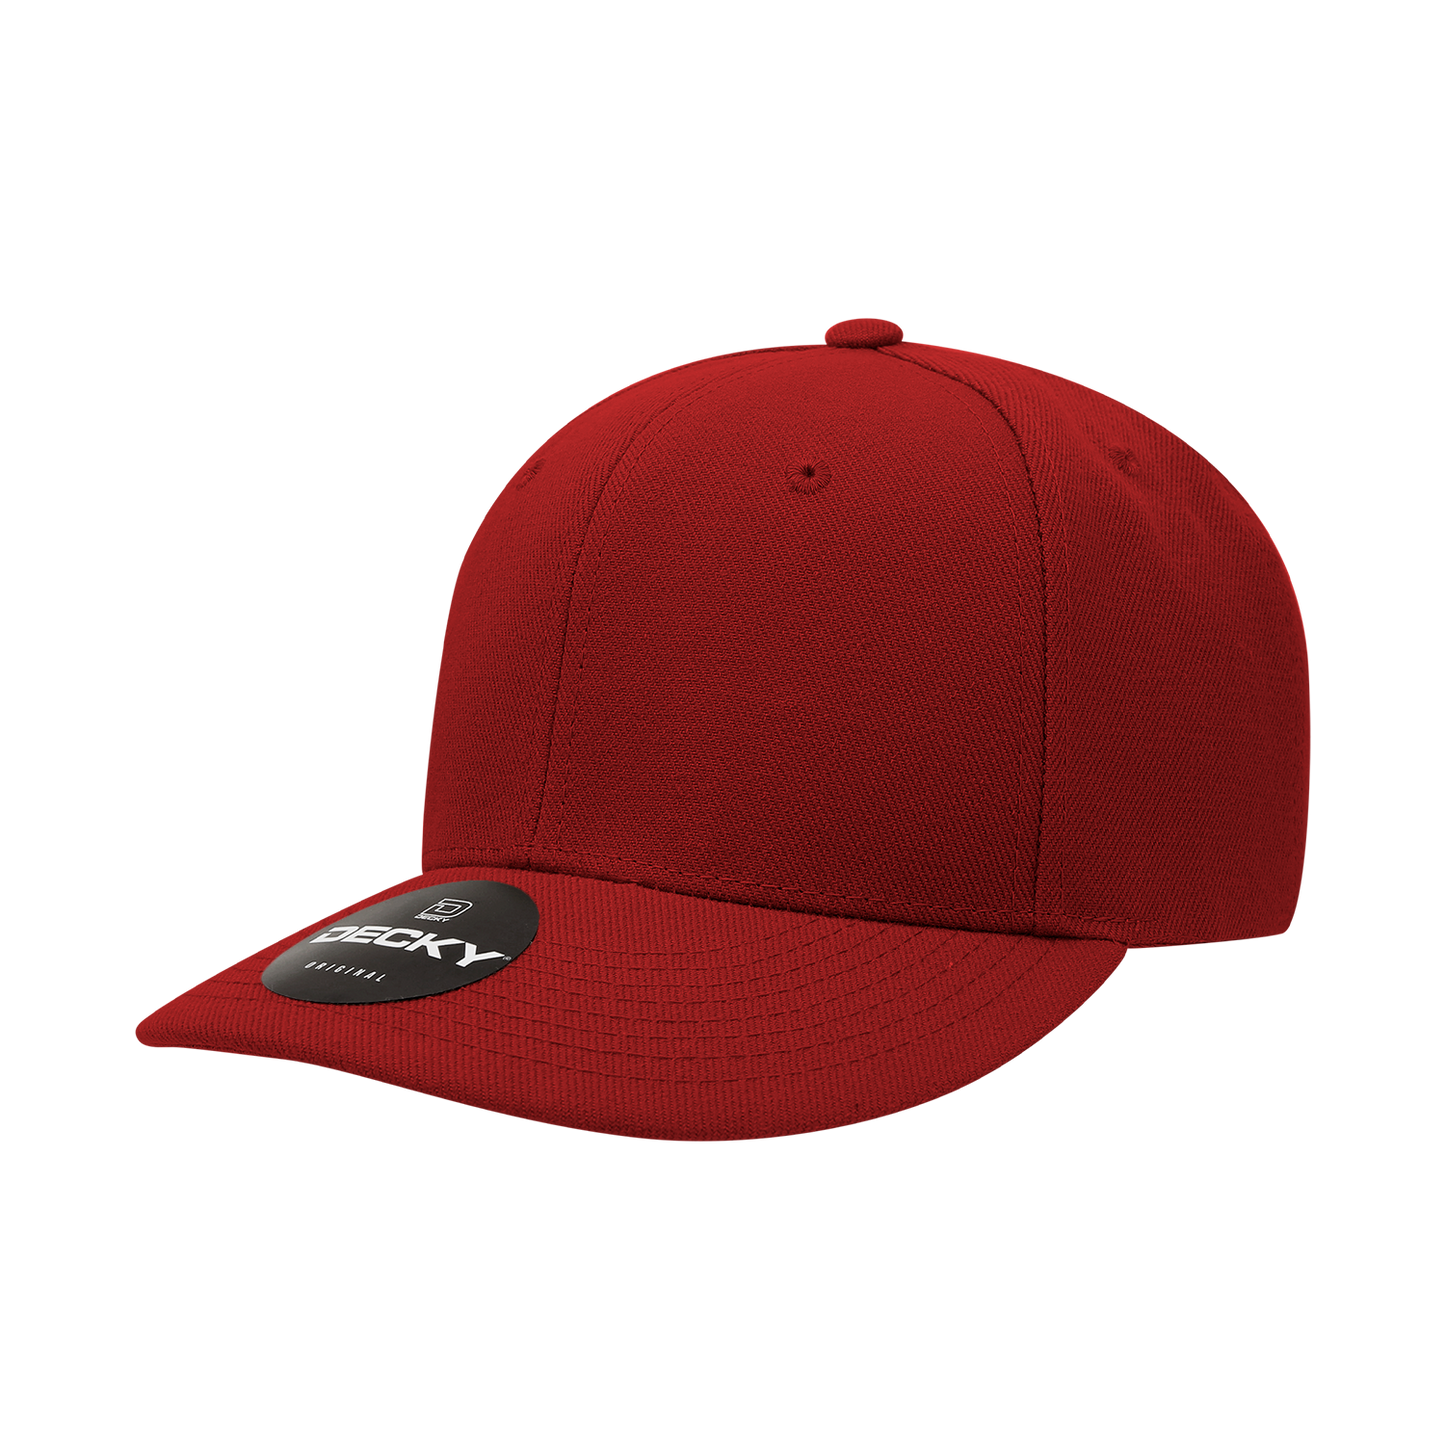 Decky 207 - Deluxe, Mid Pro Baseball Caps - 207: Black/Grey